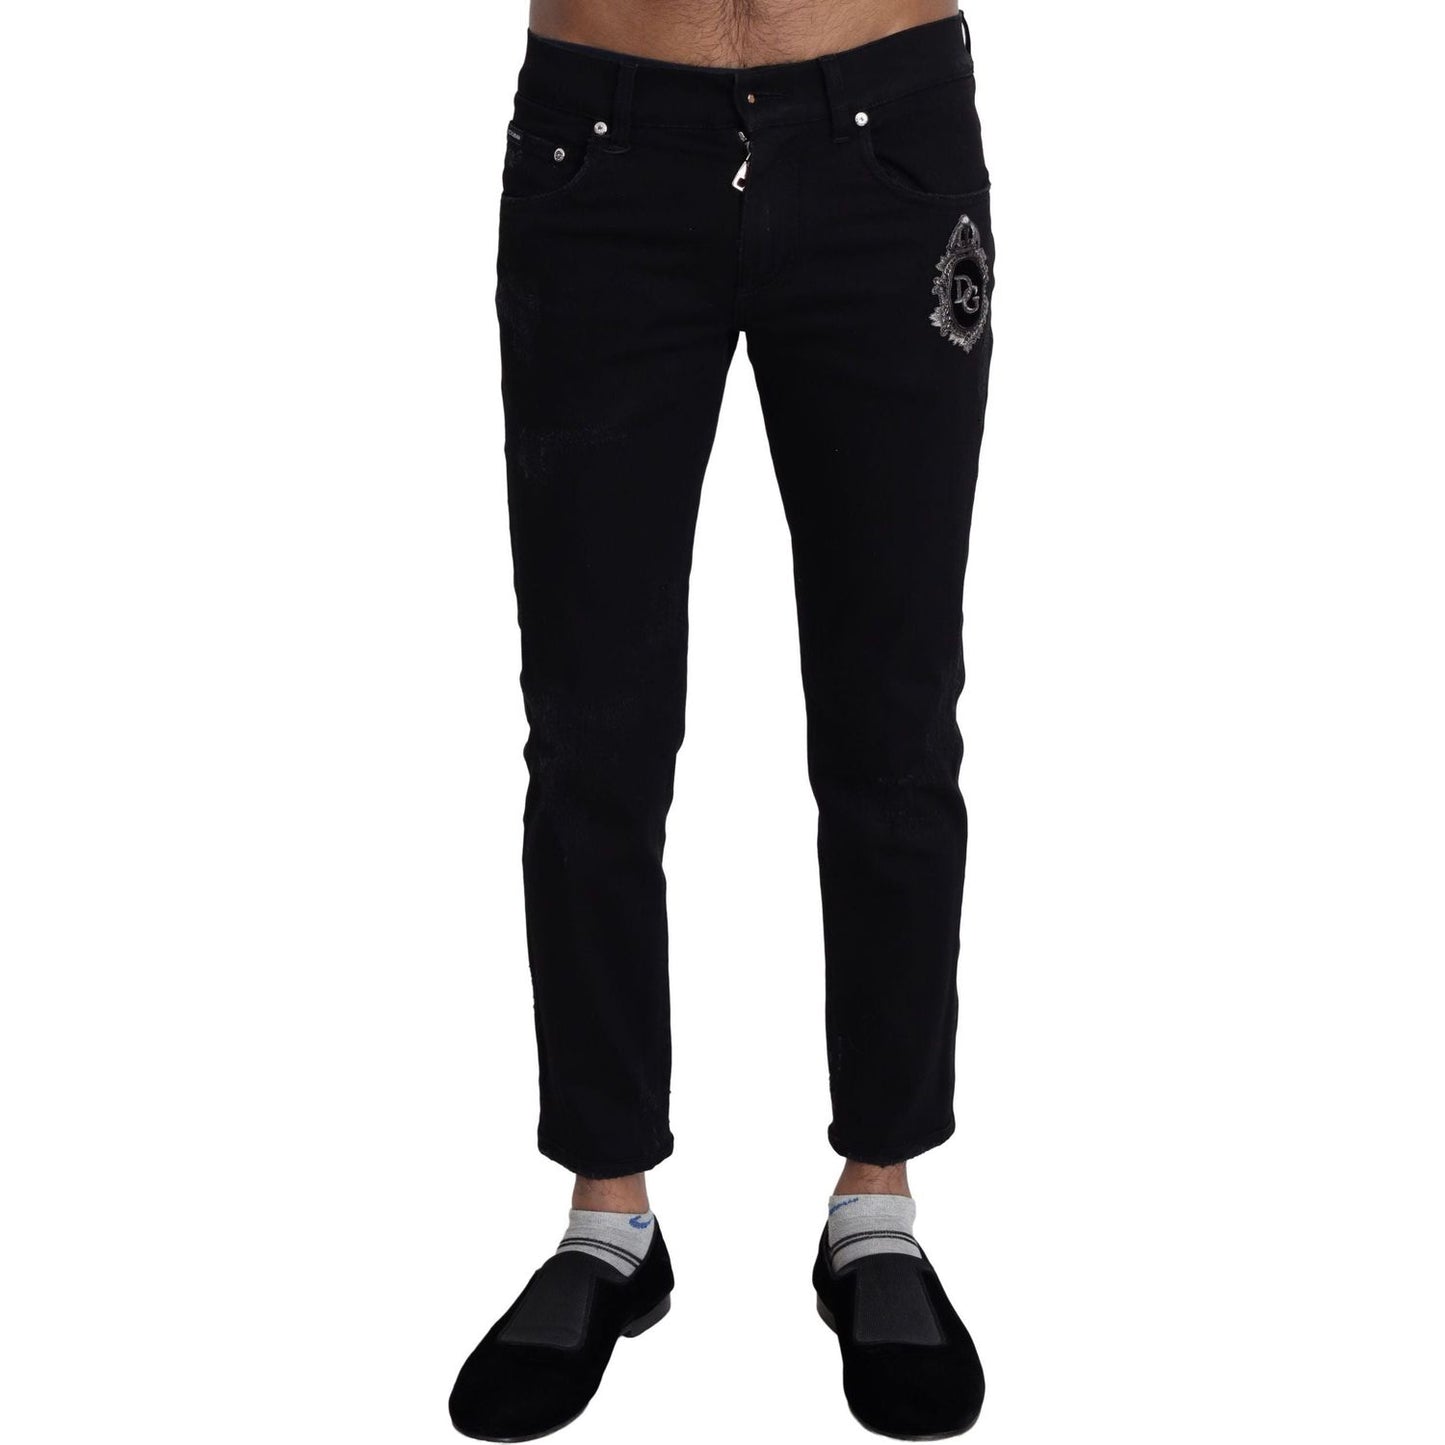 Dolce & Gabbana Elegant Skinny Black Jeans with Embroidery black-heraldic-embroidery-skinny-denim-jeans Jeans & Pants IMG_4769-scaled-6af4d084-175.jpg